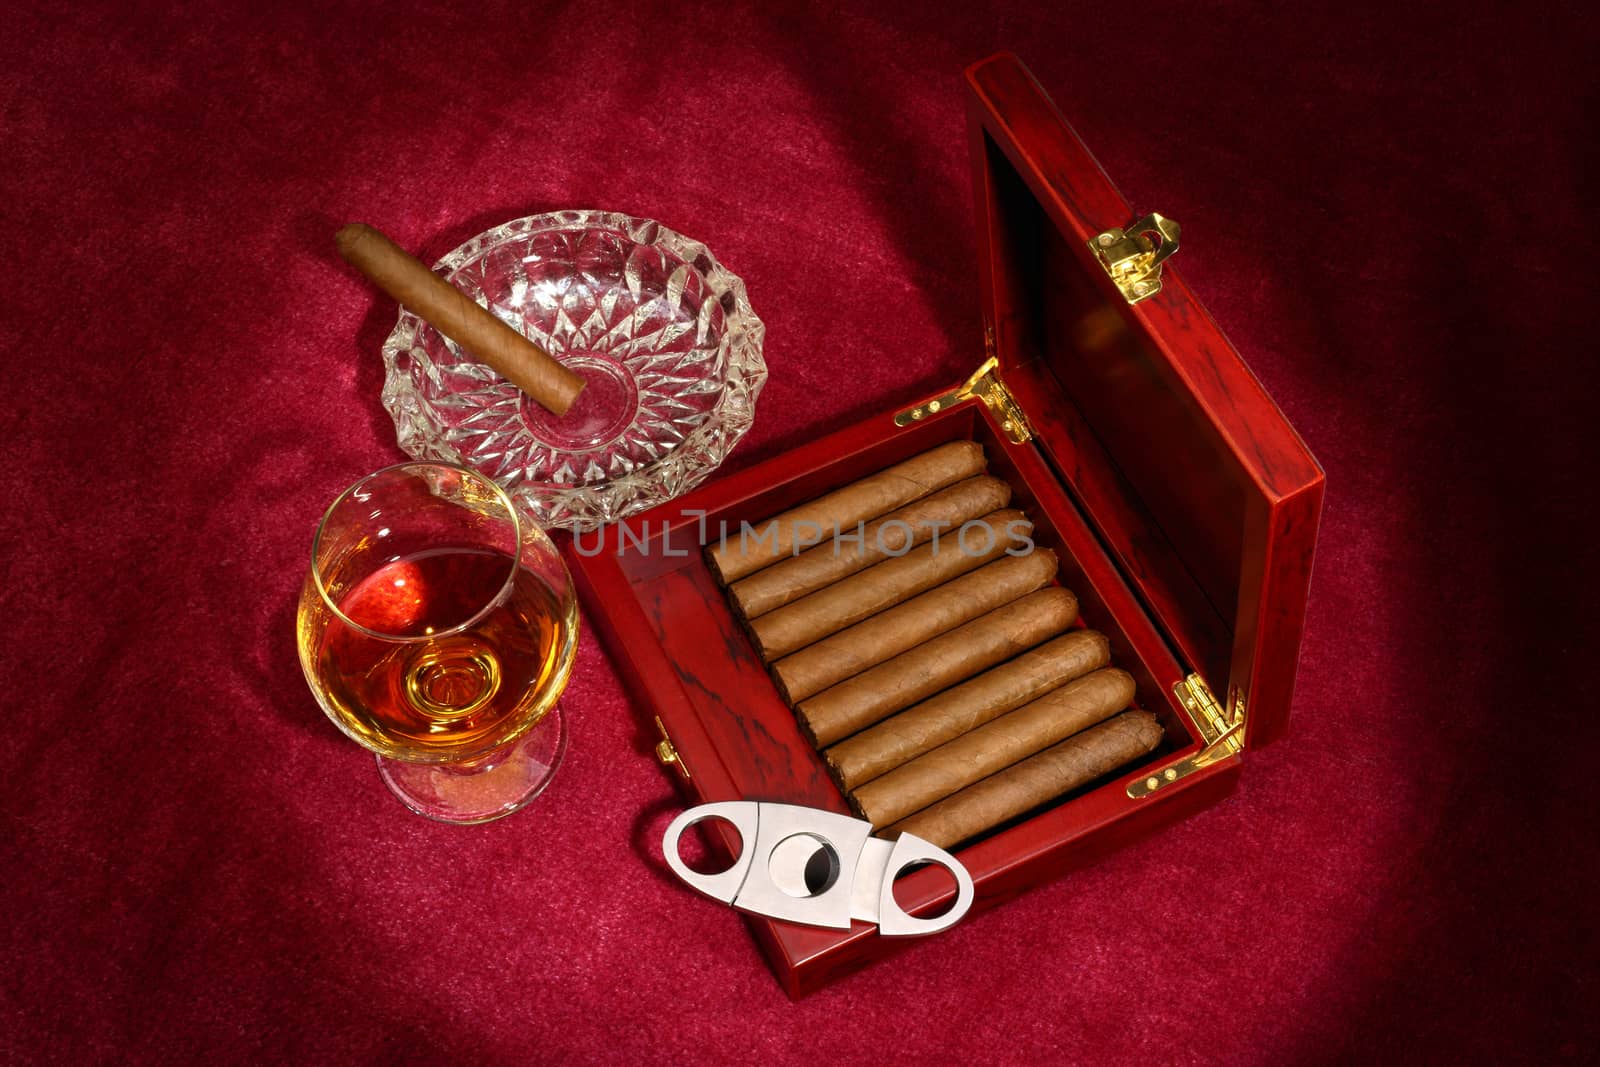 cigars by alexkosev